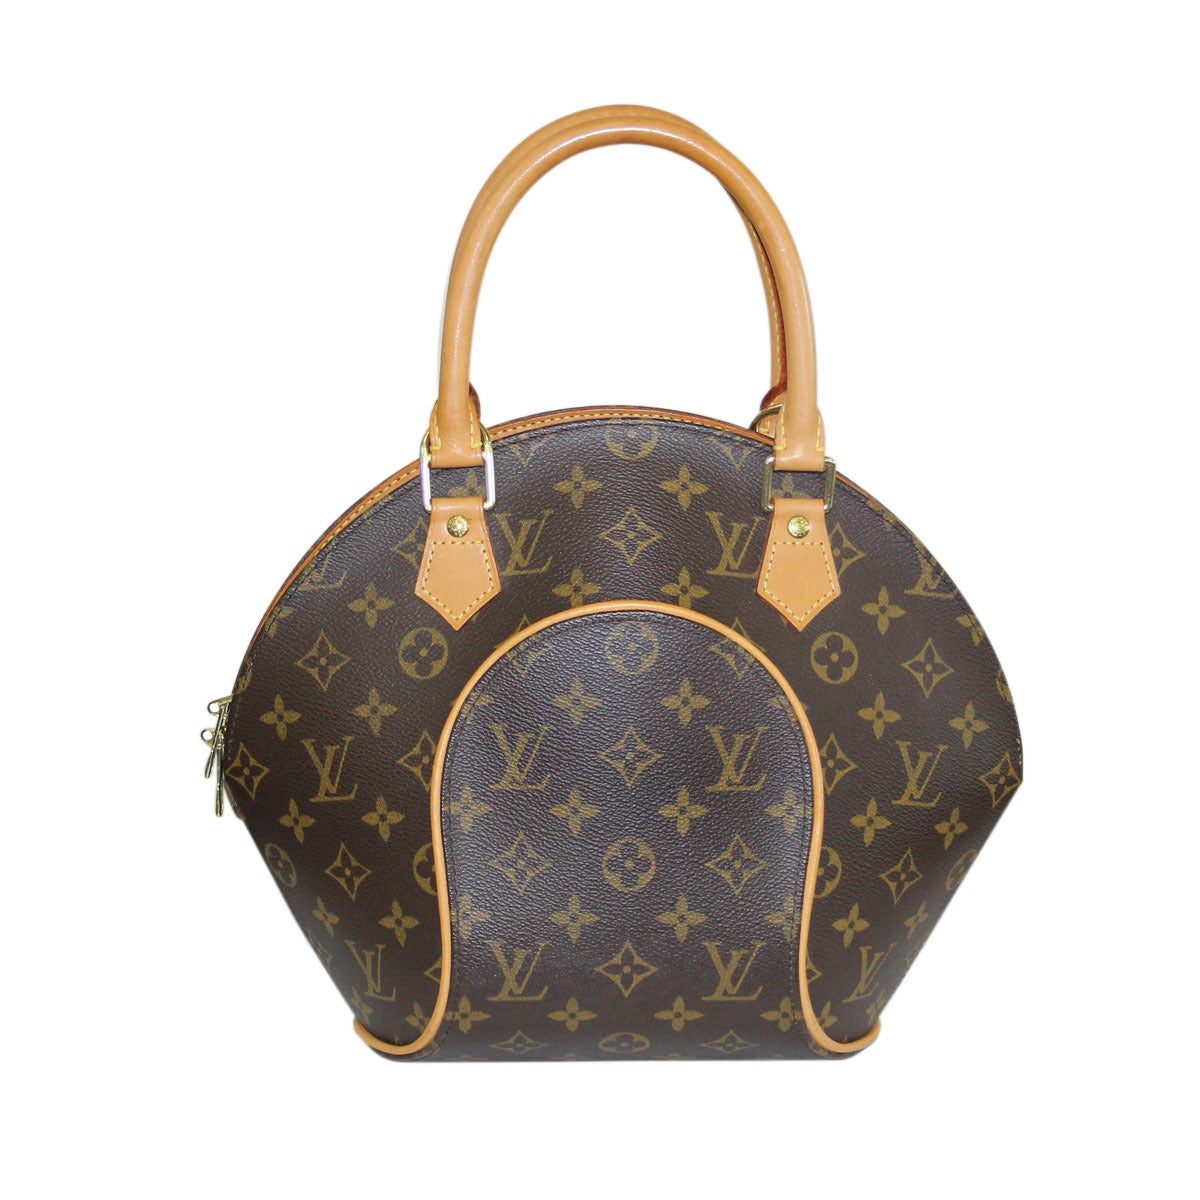 Louis Vuitton Monogram Ellipse PM Handbag Purse at 1stdibs